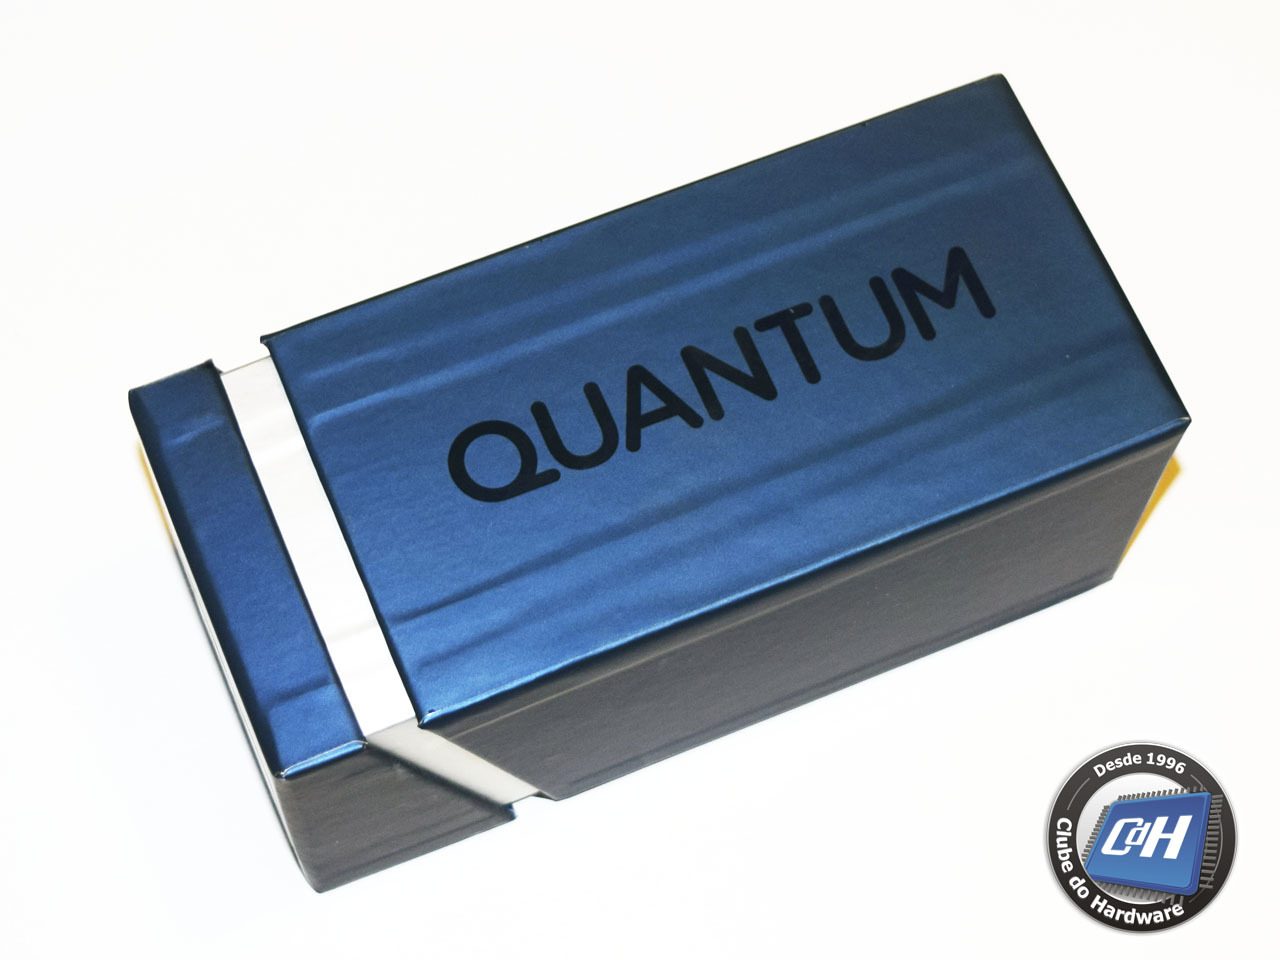 Teste do smartphone Quantum FLY - Smartphones - Clube do Hardware